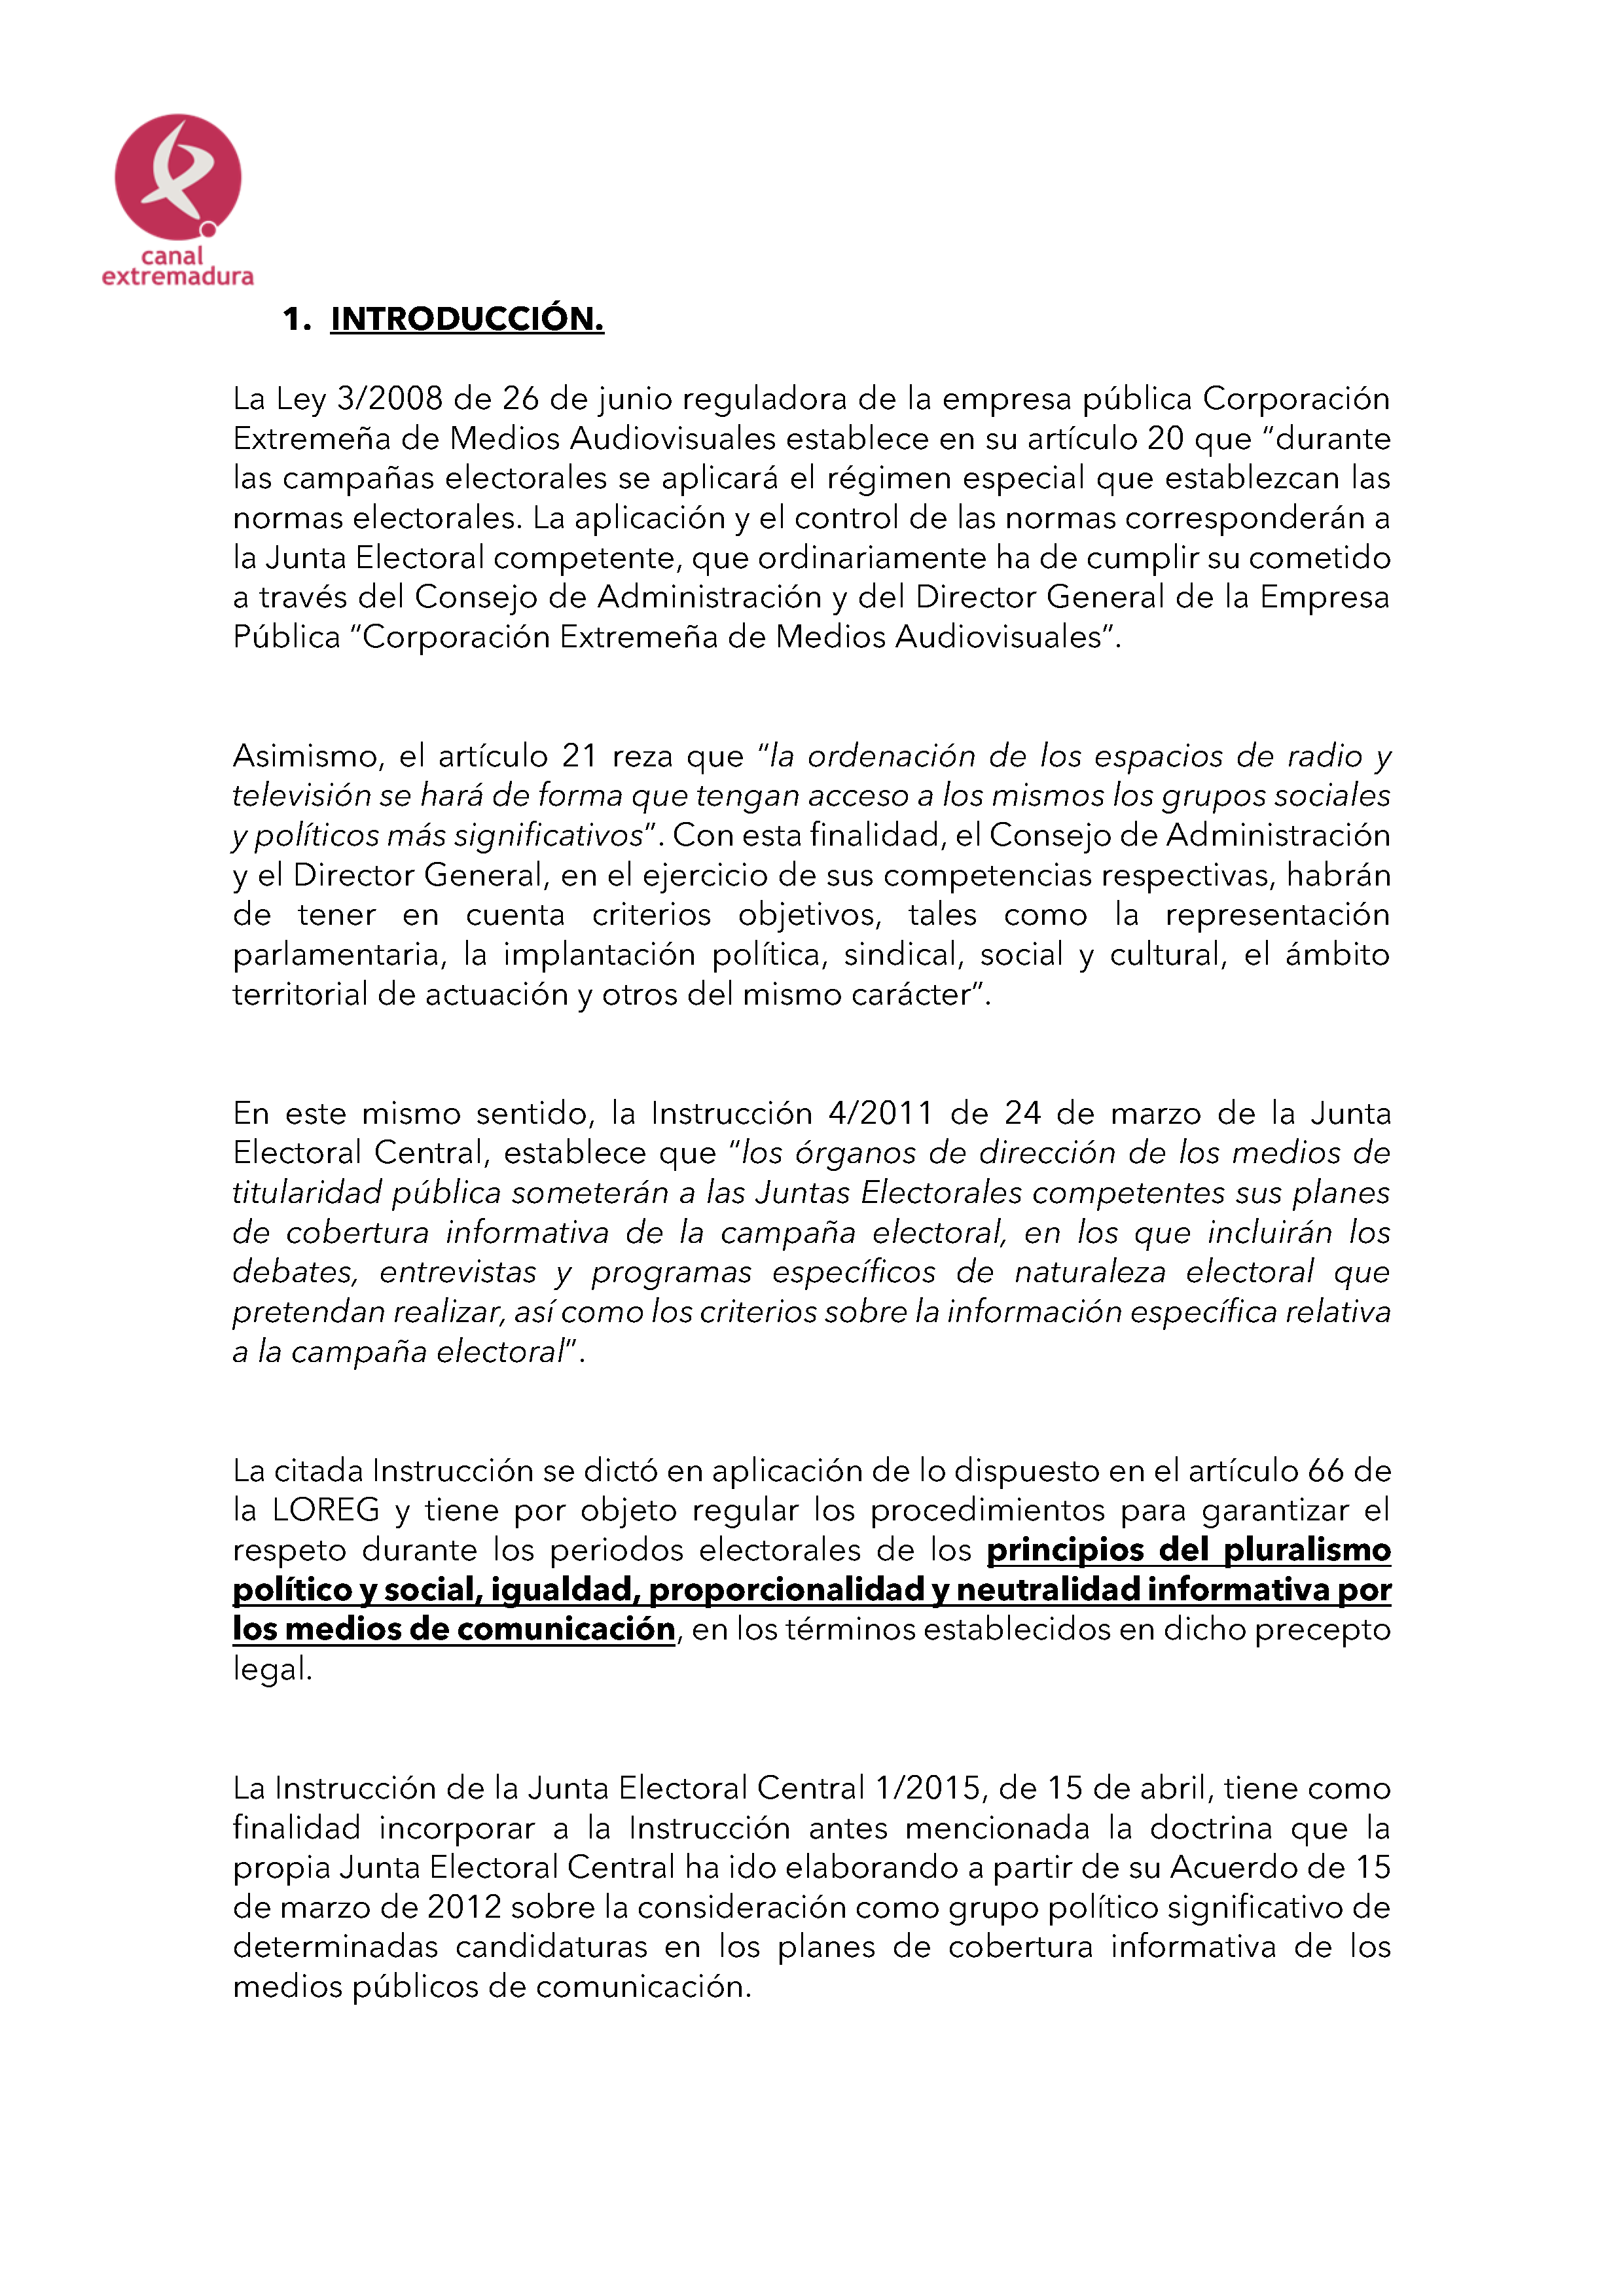 PLAN DE COBERTURA INFORMATIVA DE CANAL EXTREMADURA Pag 2